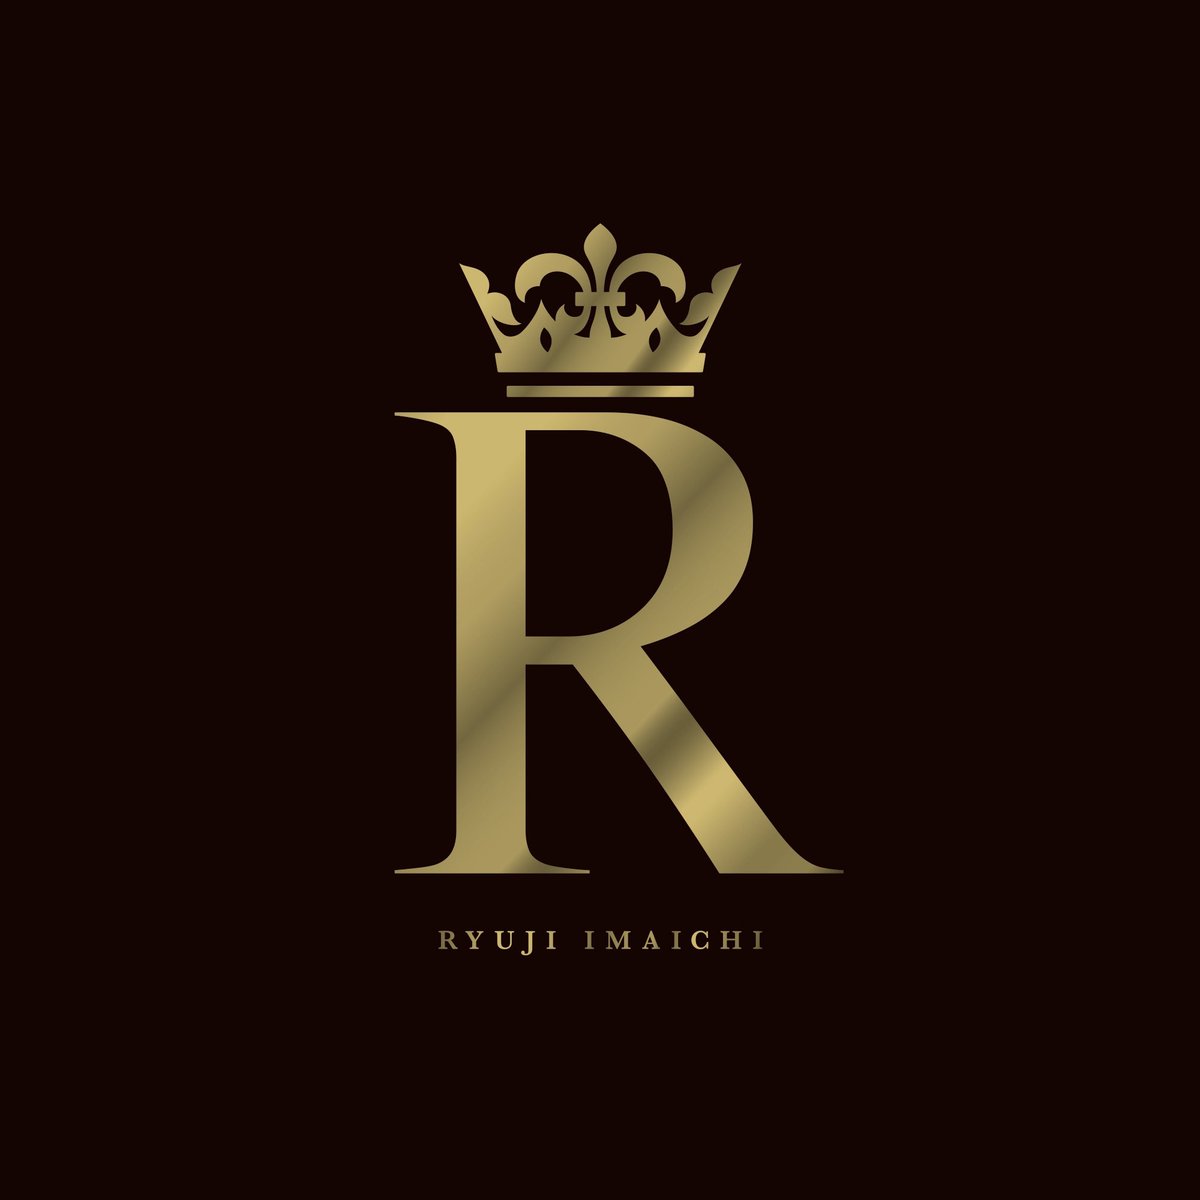 6/26 Release New Album「R」 JACKET PHOTO #今市隆二 #RYUJIIMAICHI #R_RYUJIIMAICHI @RyujiJSB_3 avex.jp/ryuji_imaichi/…